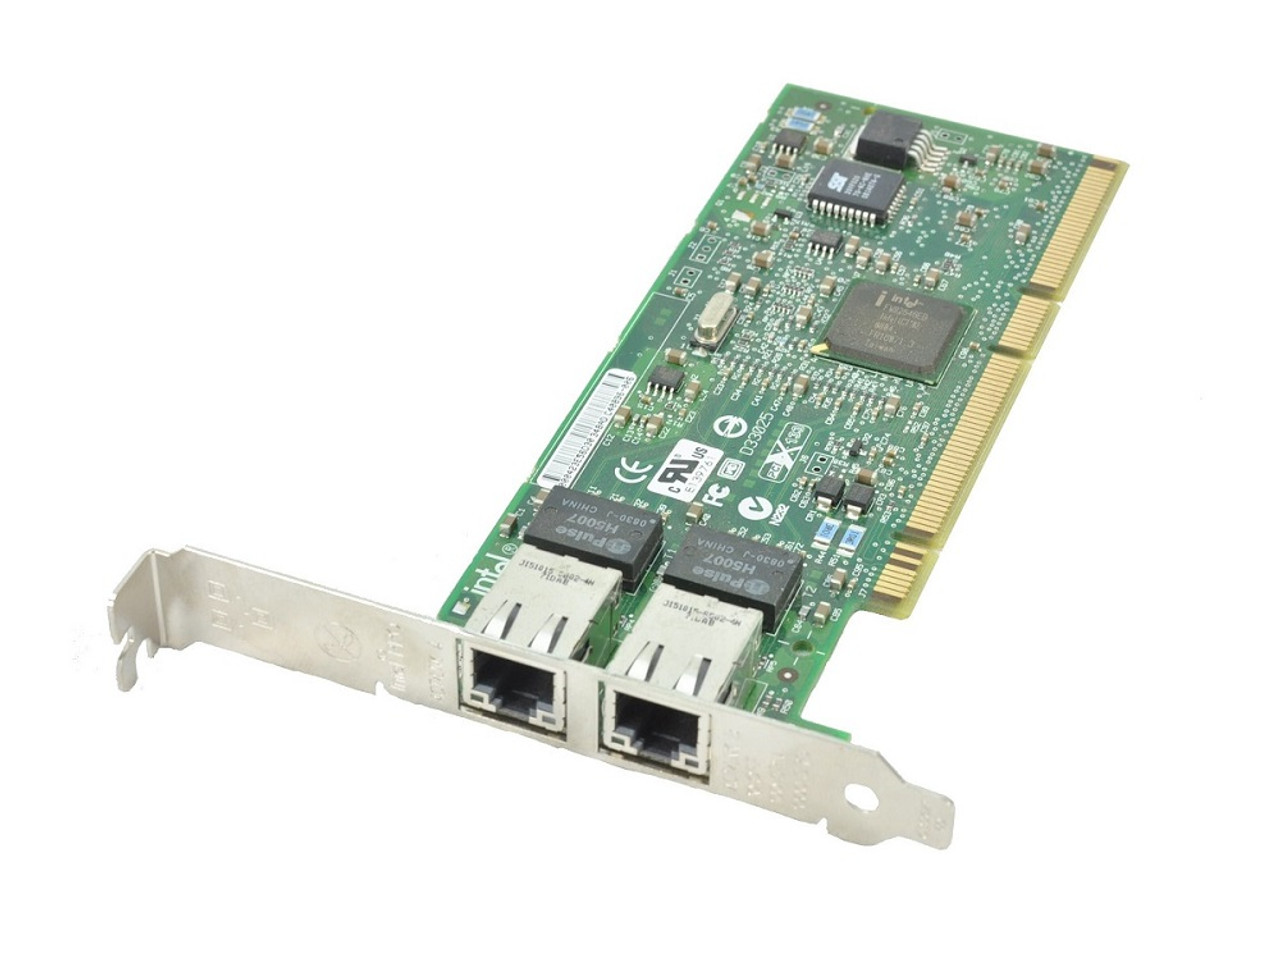 375-3108-02 - Sun 2GB PCI-x 2-Port 64Bit 133MHz Fiber Channel Host Bus Adapter